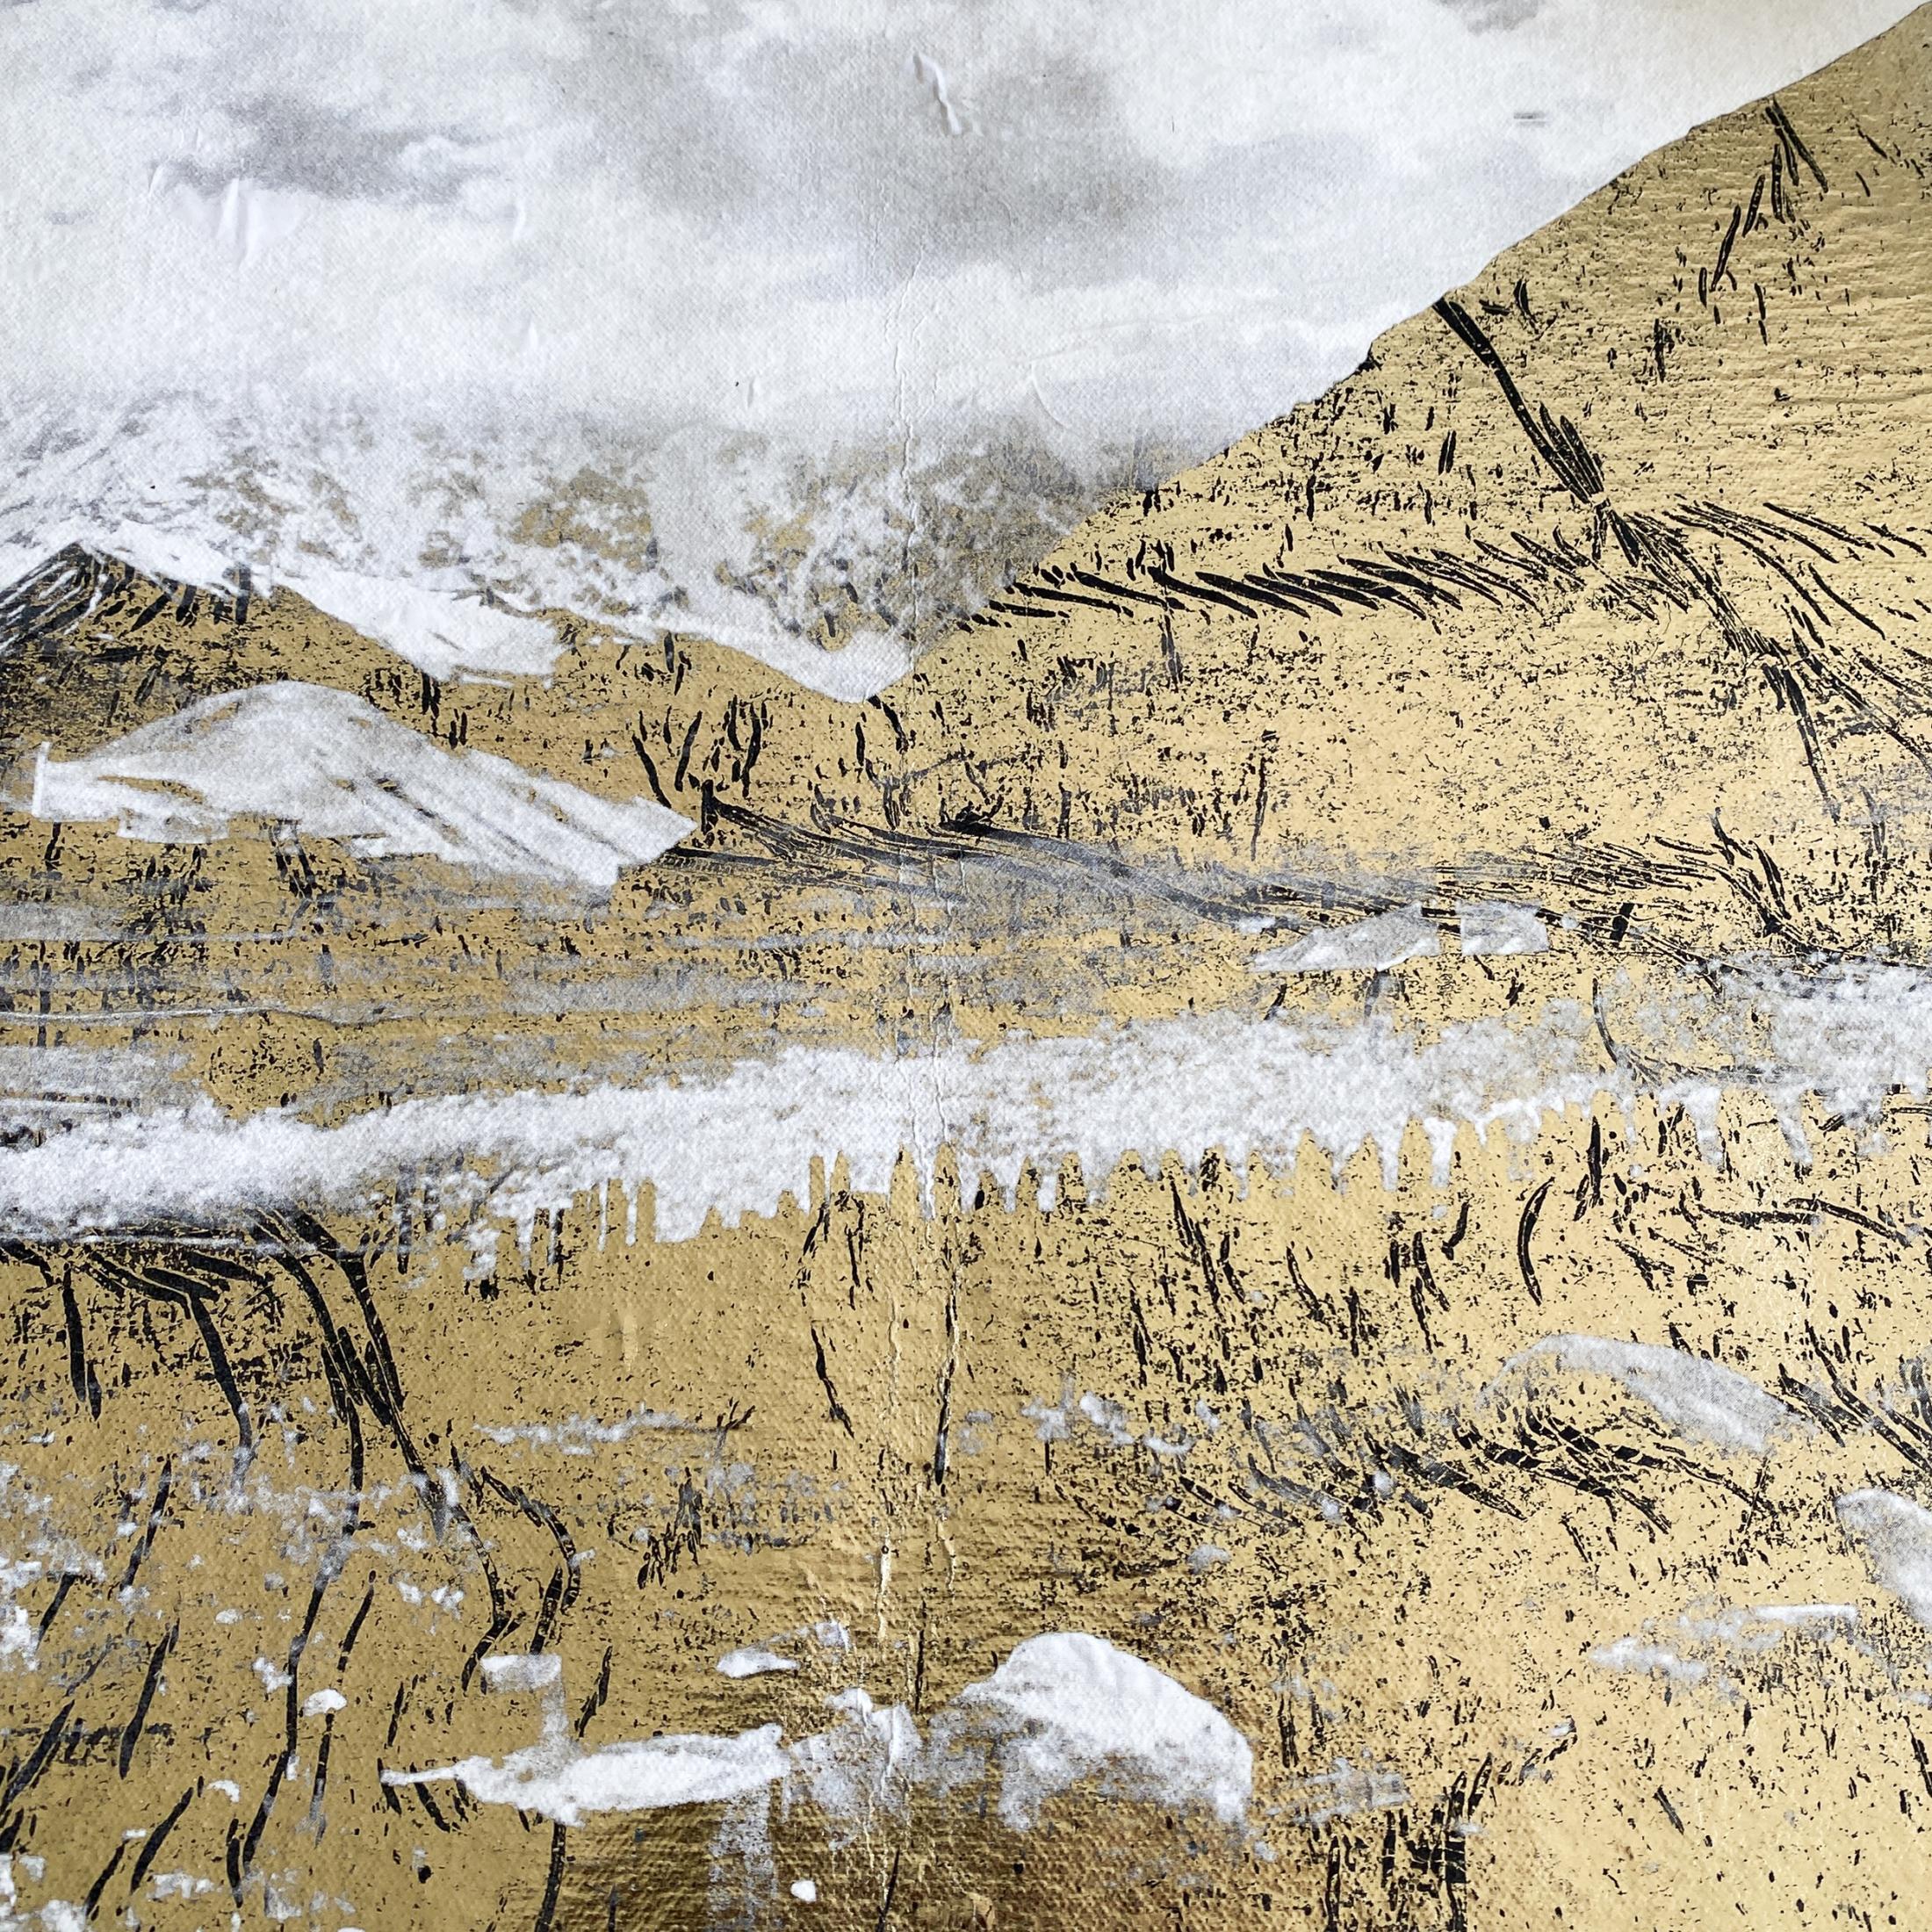 Ushguli mit Shakra-Berg (Grau), Landscape Painting, von Bill Claps